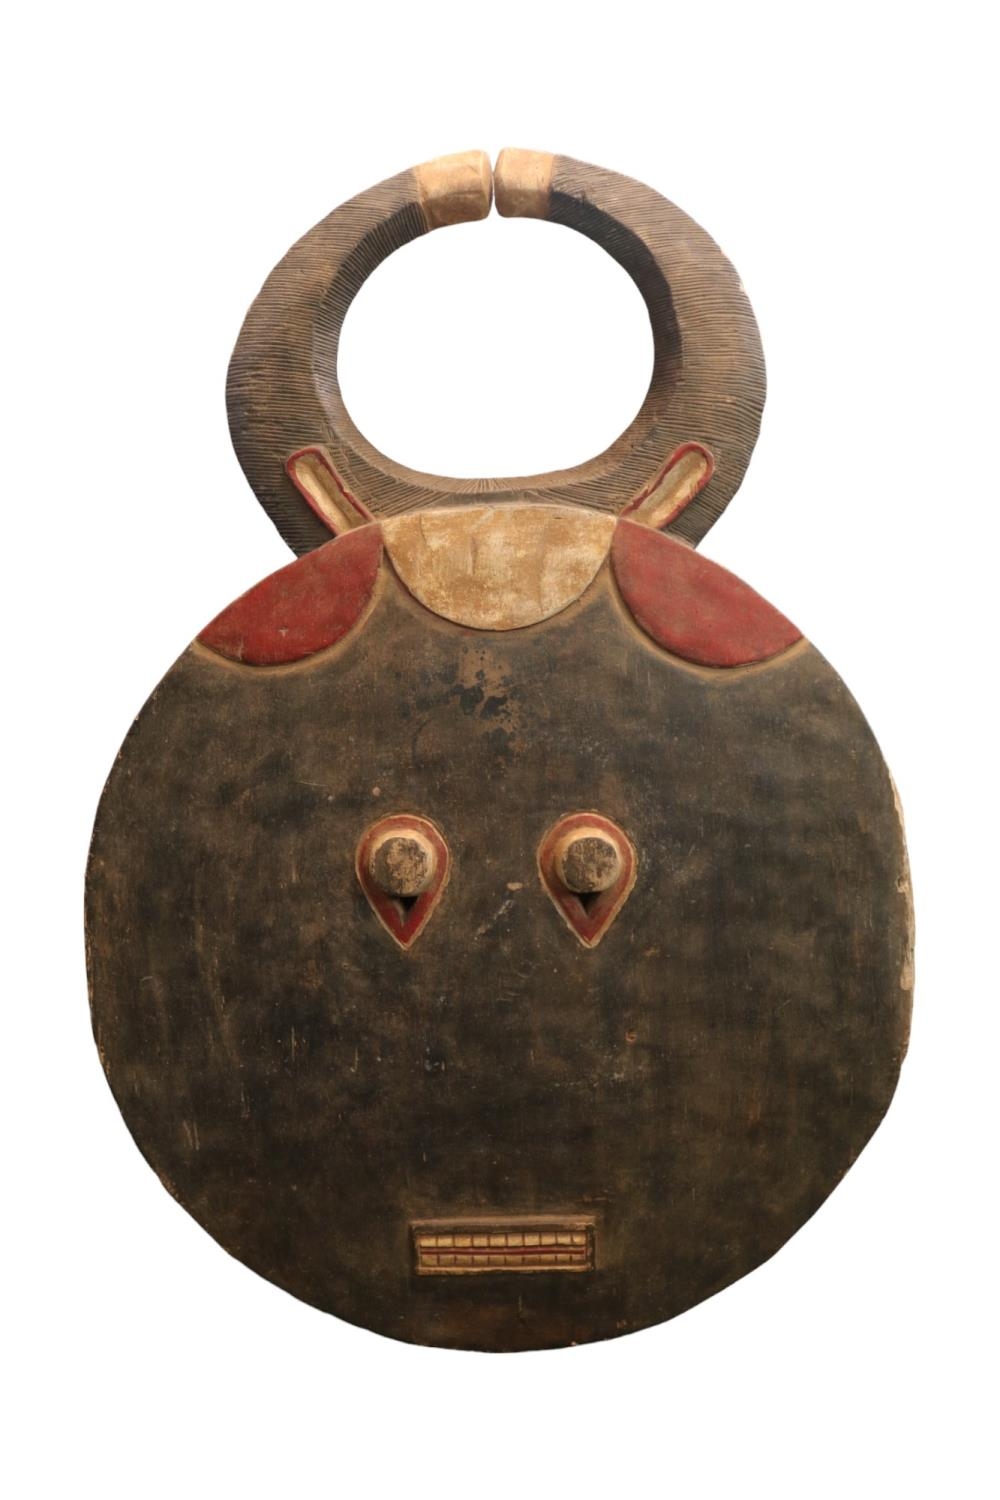 Ivory Coast Baule Goli Mask of circular design with rectangular diminutive mouth and large horns.